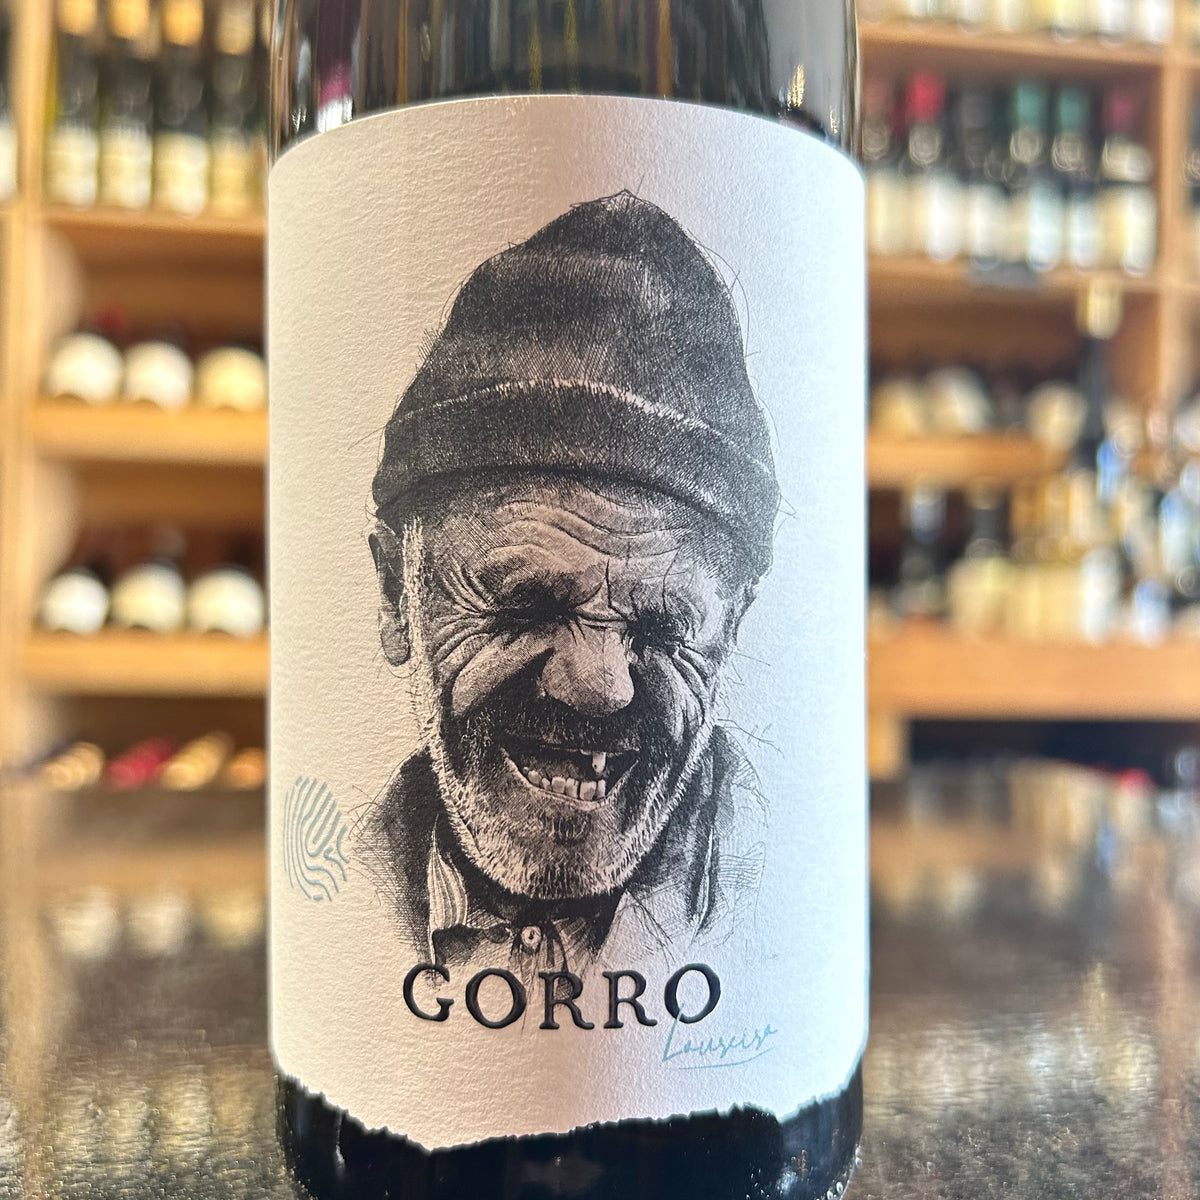 Gorro Loureiro Vinho Verde, Portugal Boutique Winery 2022 - Butler&#39;s Wine Cellar Brighton